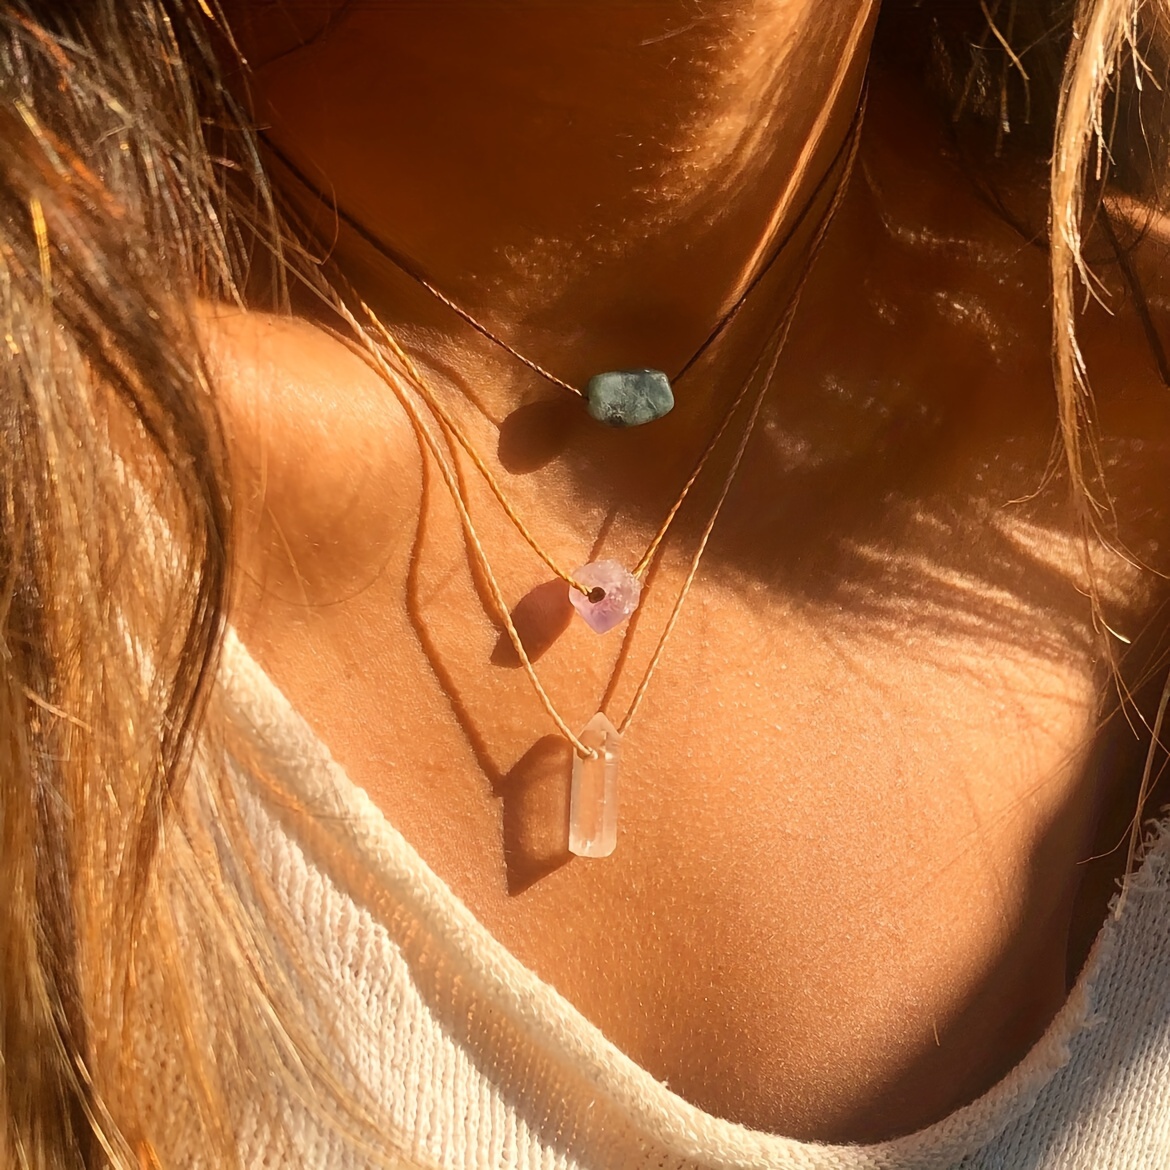 

3pcs/set Personality Natural Irregular Crystal Stone Pendant Adjustable Rope Necklace For Women (natural Stone Presence Color Difference Irregular Shape)